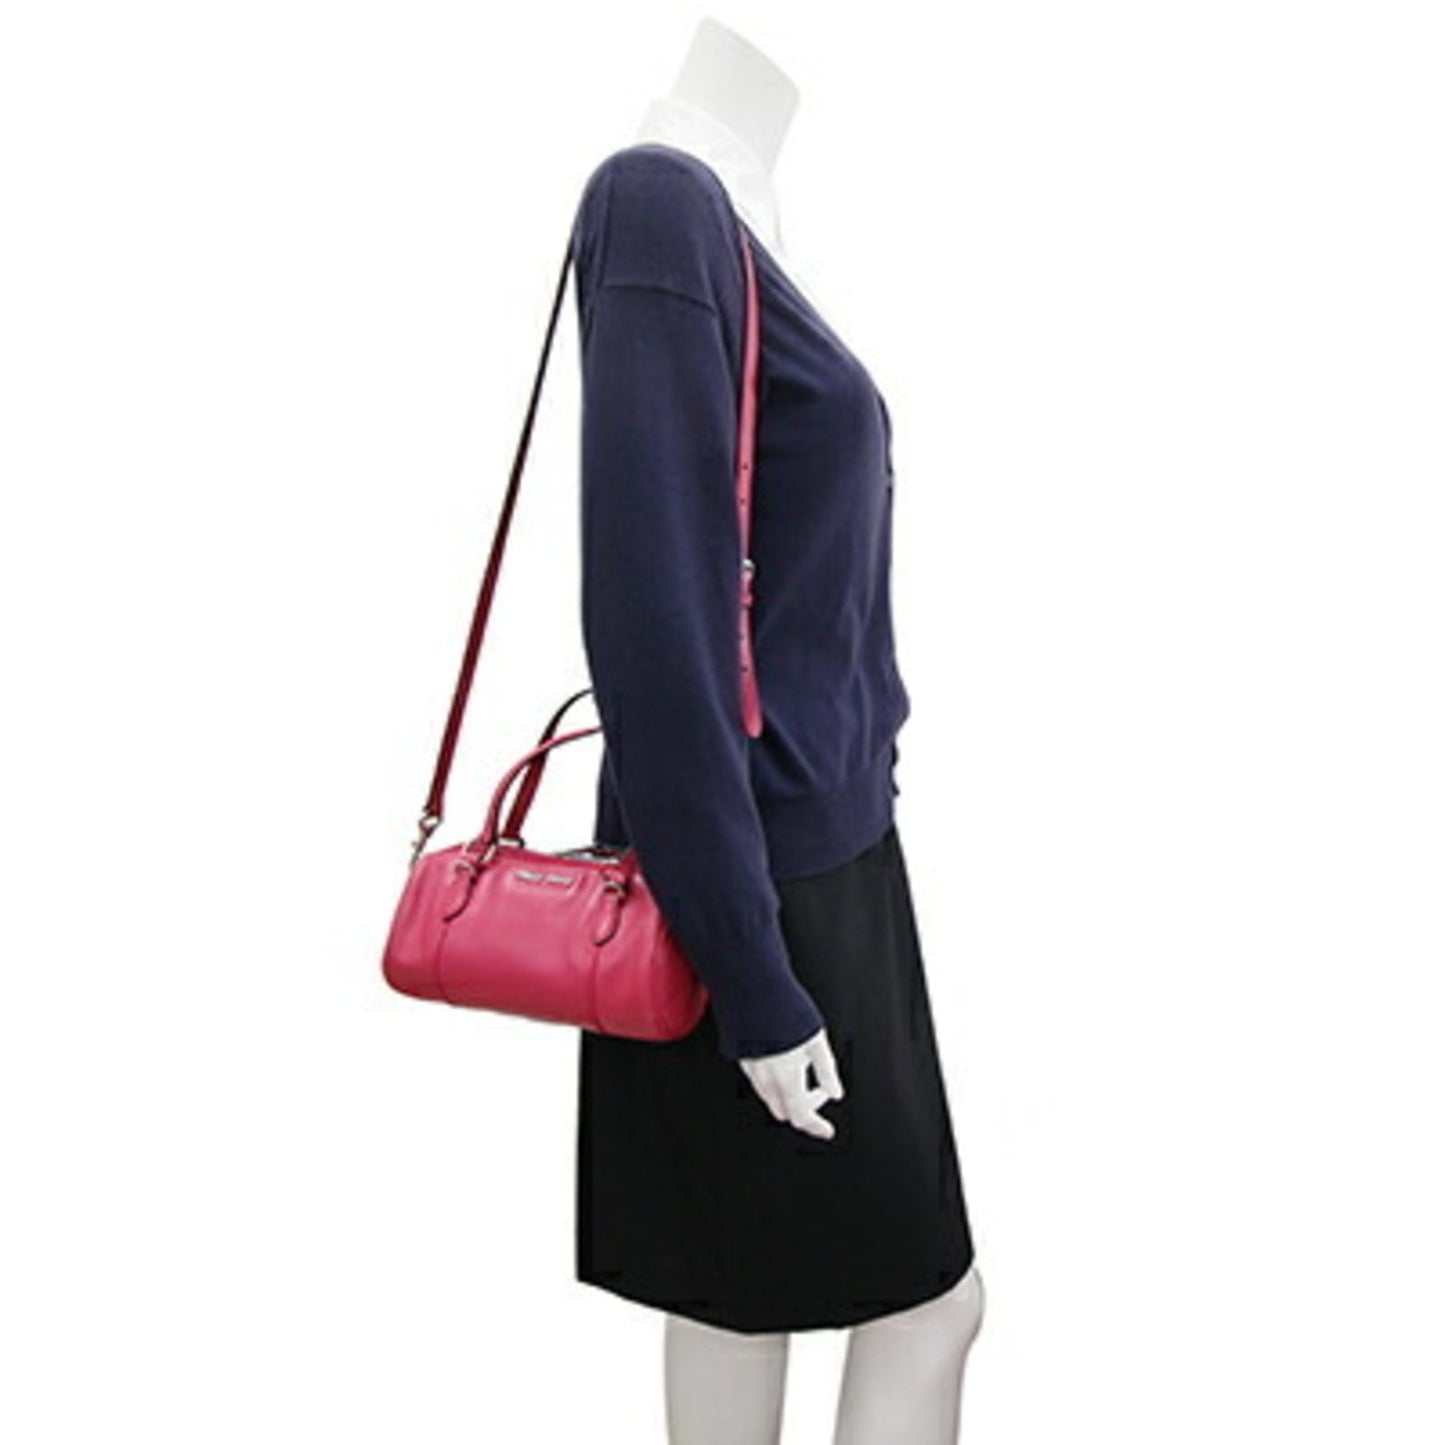 Miu Miu Women's Leather Pink Handbag with Shoulder Strap - Excellent Condition in Pink